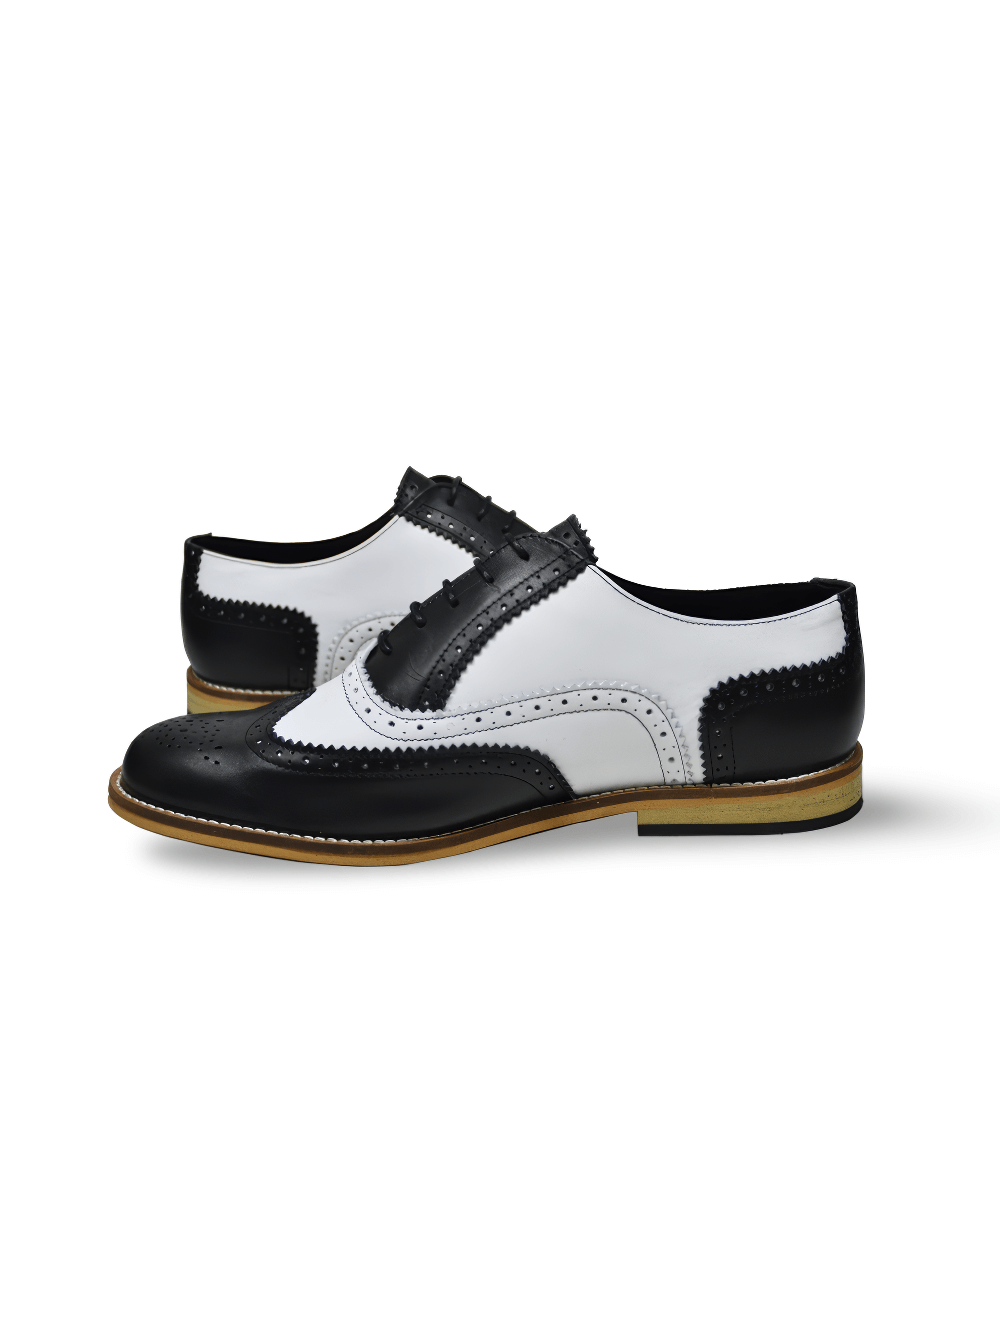 Men's Sleek Monochrome Oxford Shoes with Round Toe